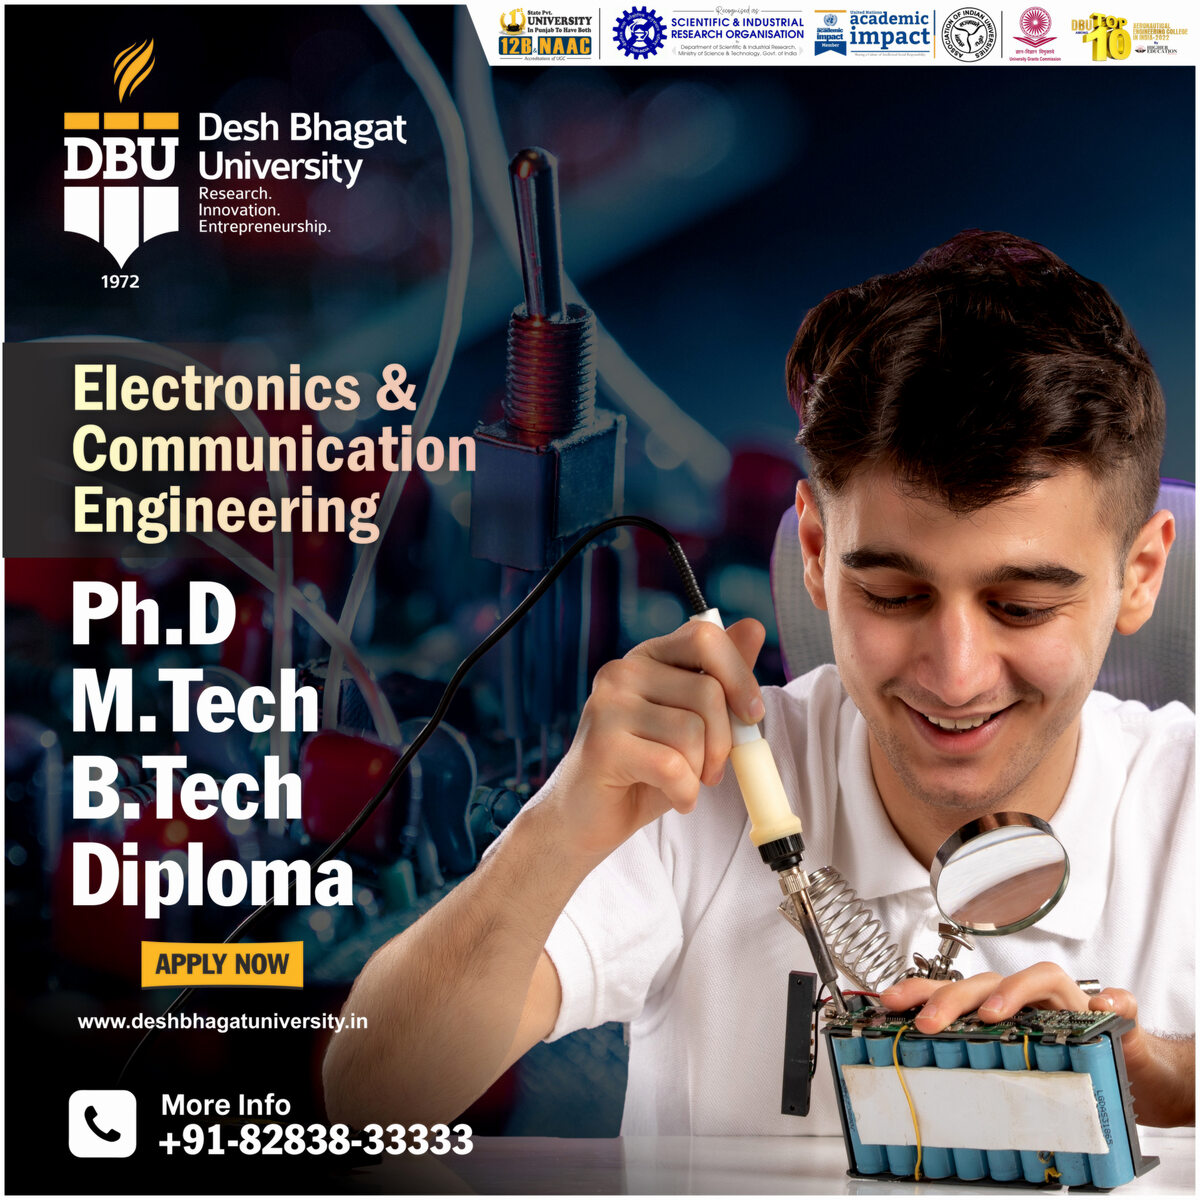 Faculty of Electronics & communication engineering Ph. D M. Tech B. Tech Diploma